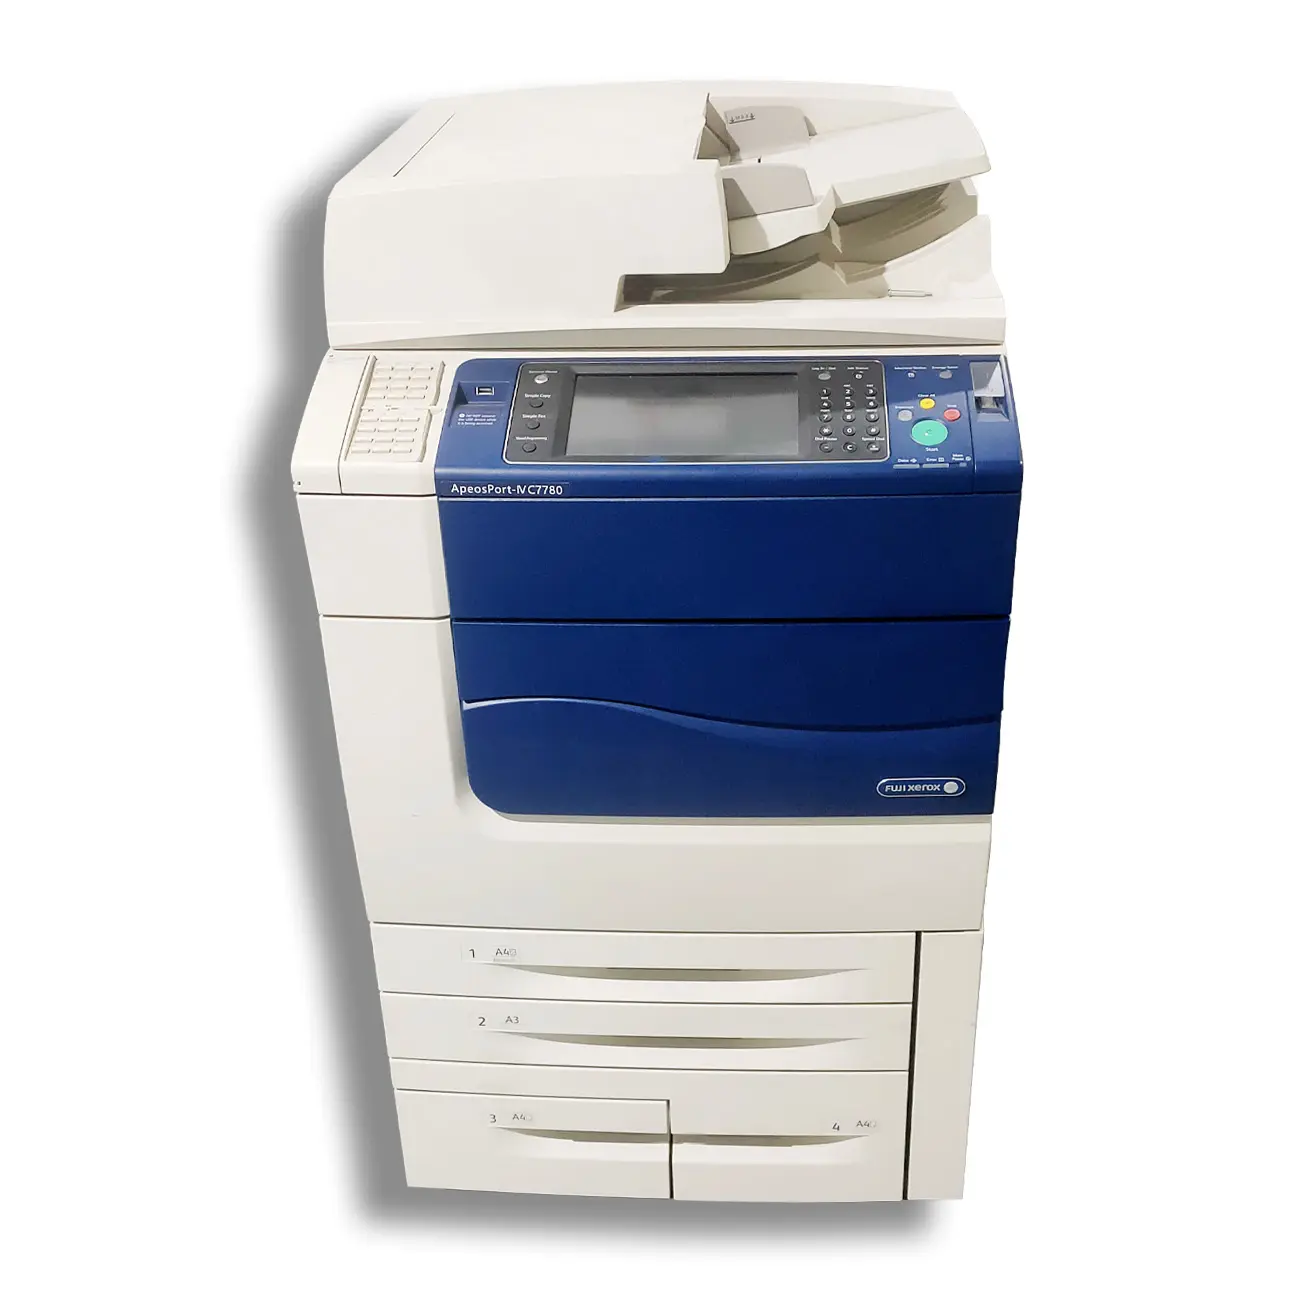 Impressora fotocópia remodelada, impressora fotocópia scanner e máquina de fotocópia para xerox iv c7780